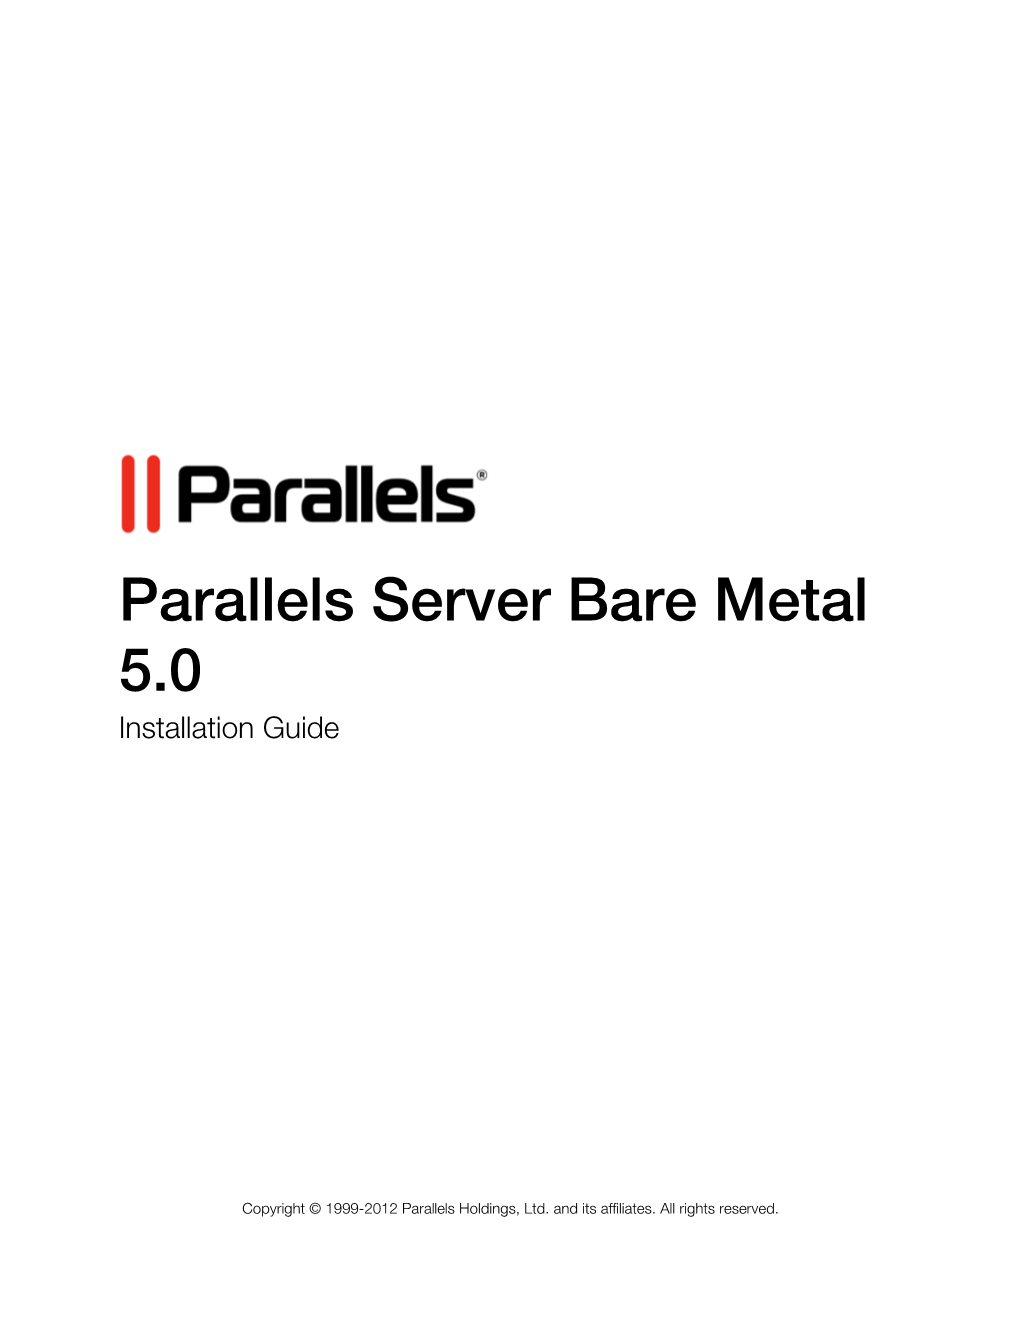 Parallels Server Bare Metal 5.0 Installation Guide